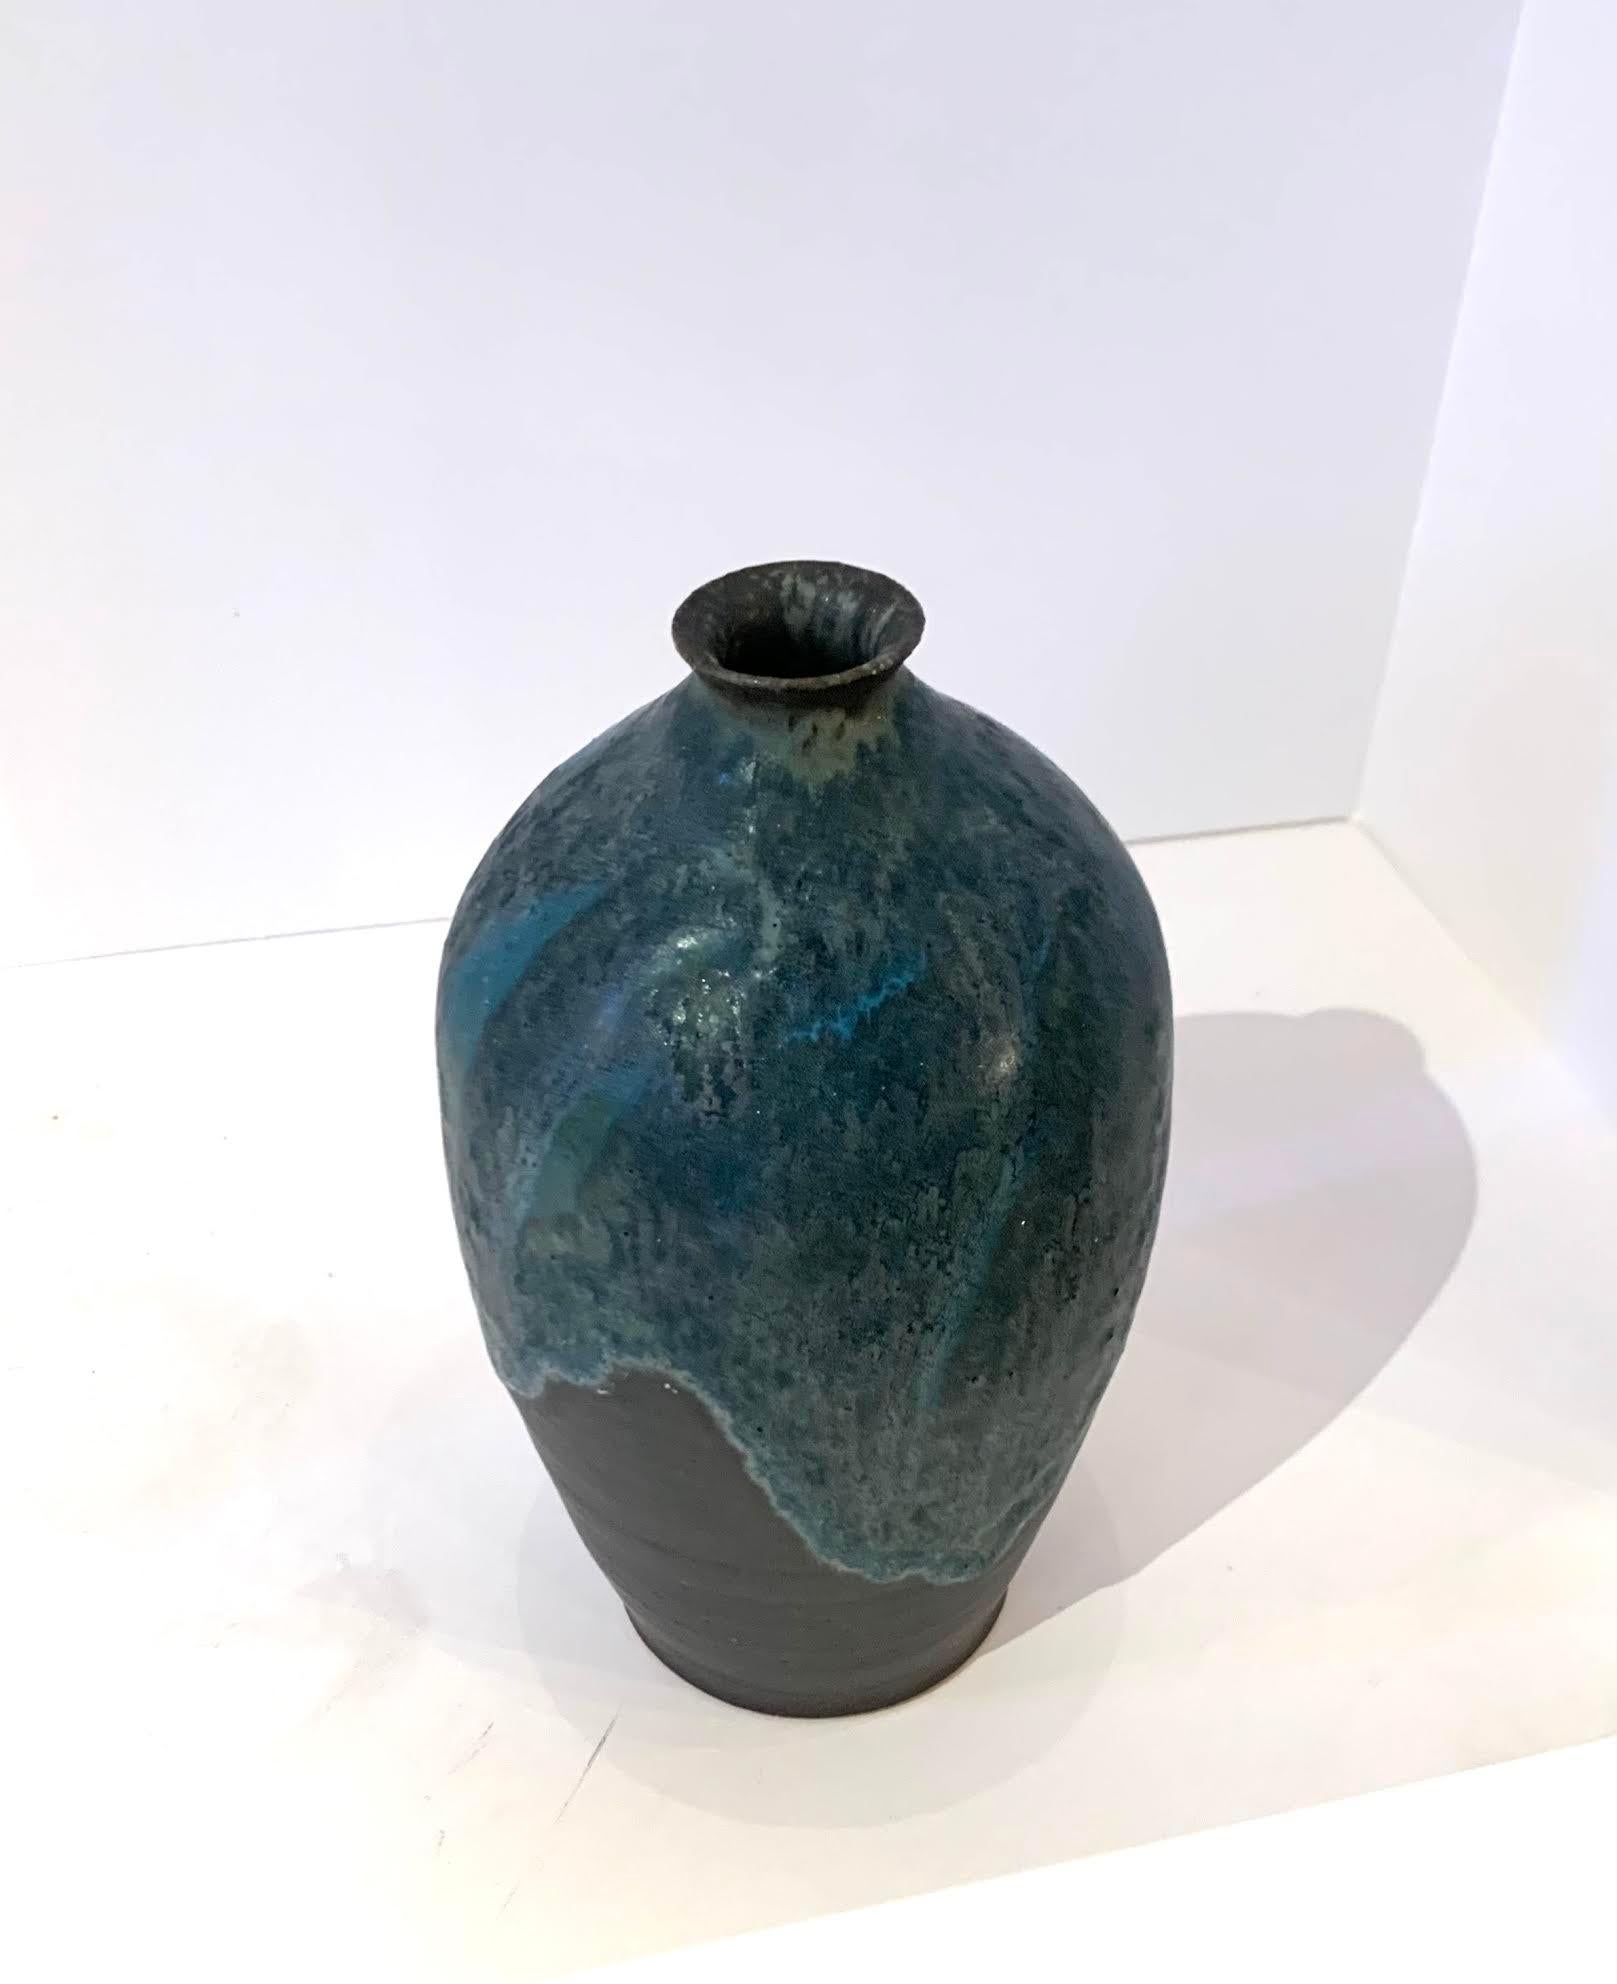 North American Blue Stoneware Vase by American Artist Peter Speliopoulos, U.S.A., Contemporary